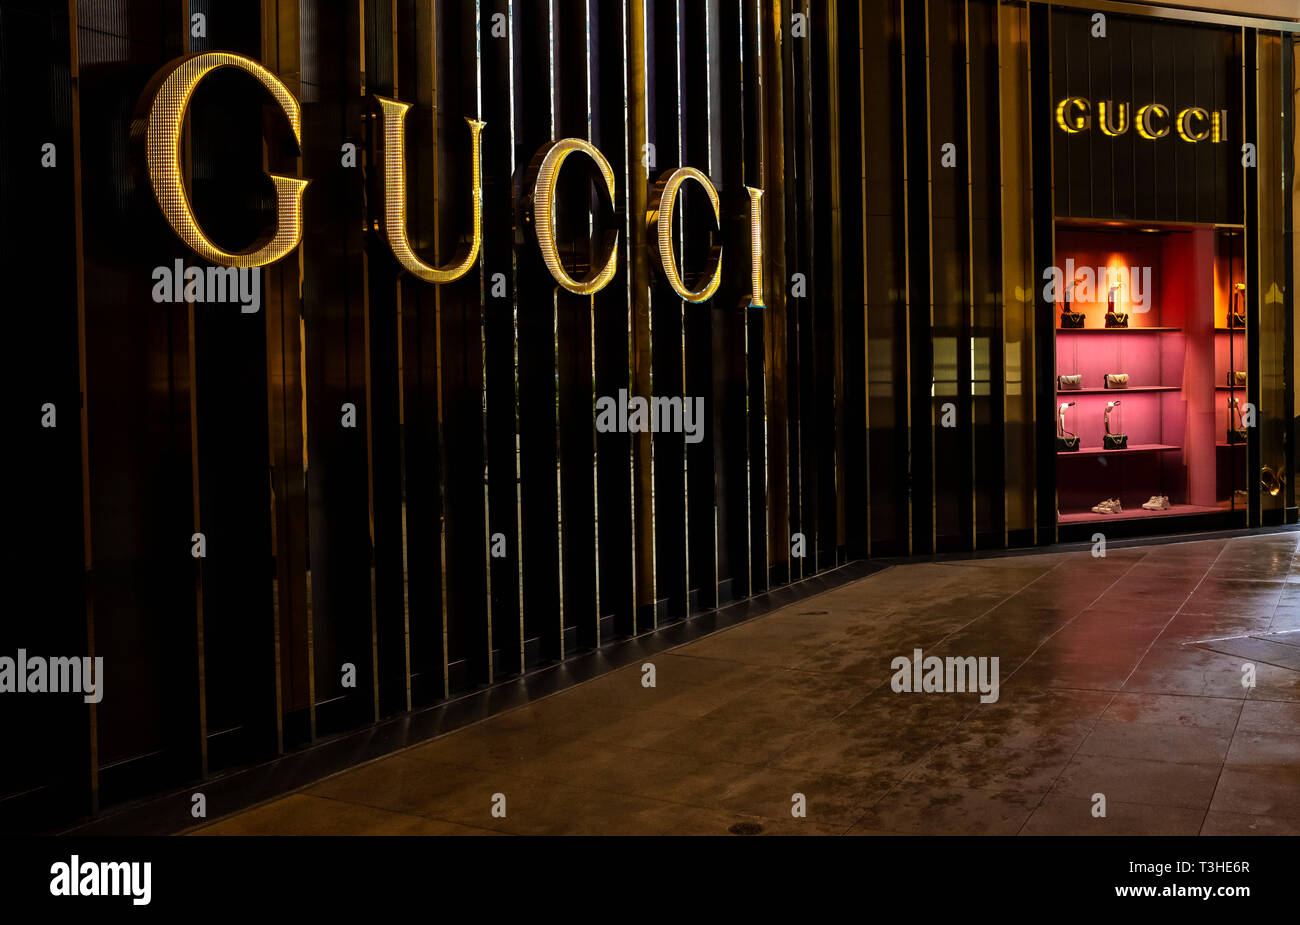 WA17093-00...WASHINGTON - Gucci store front in the Bravern Mall of Bellevue. Stock Photo